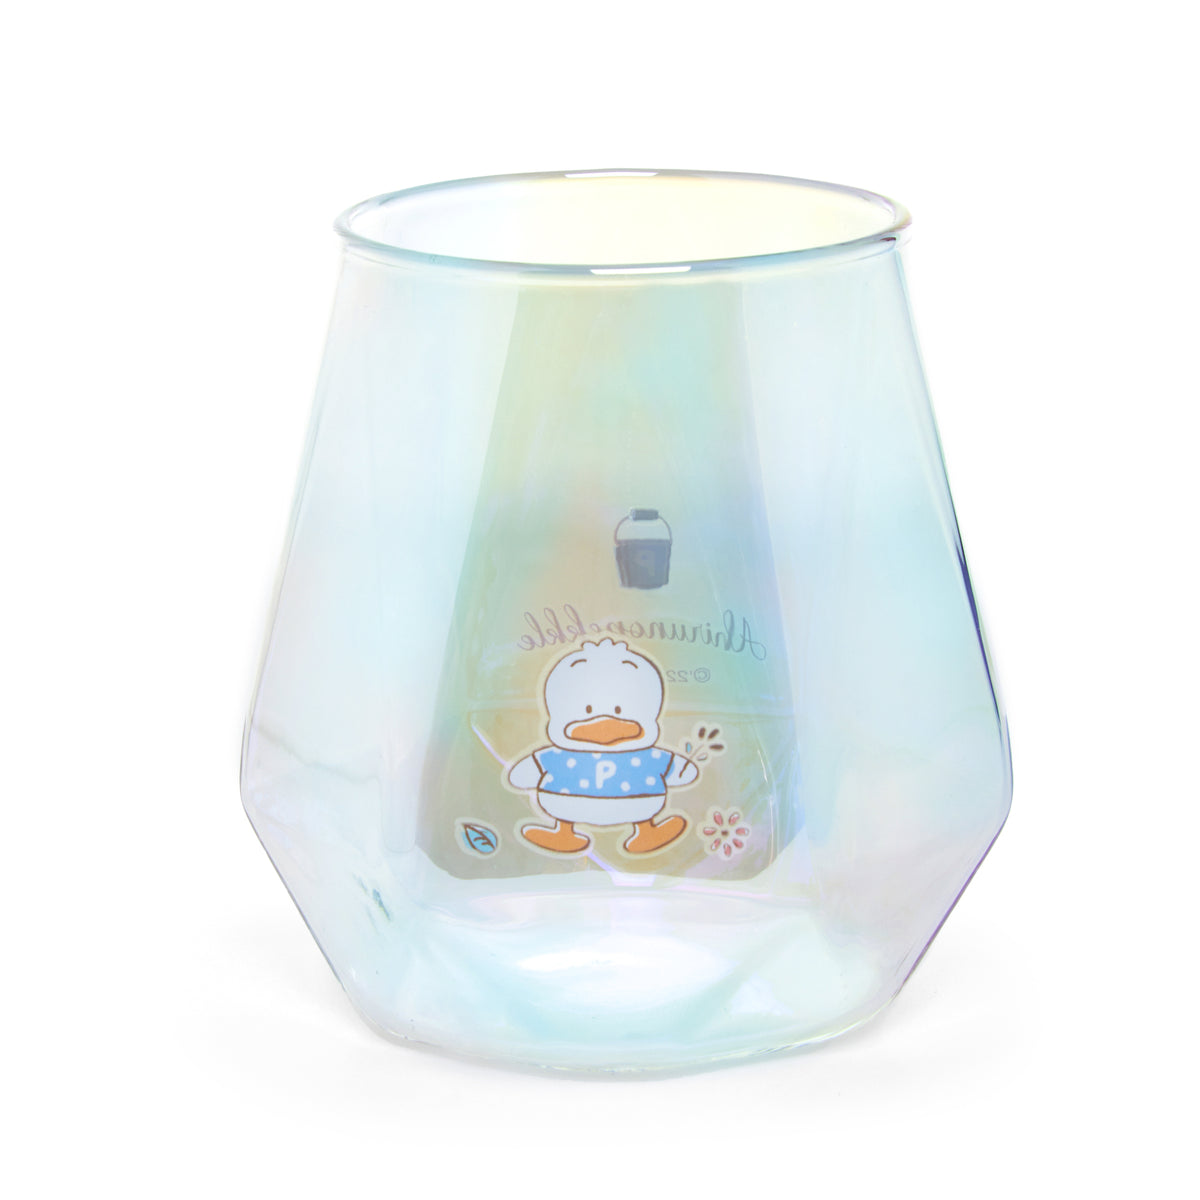 Pekkle Iridescent Glass Home Goods Global Original   